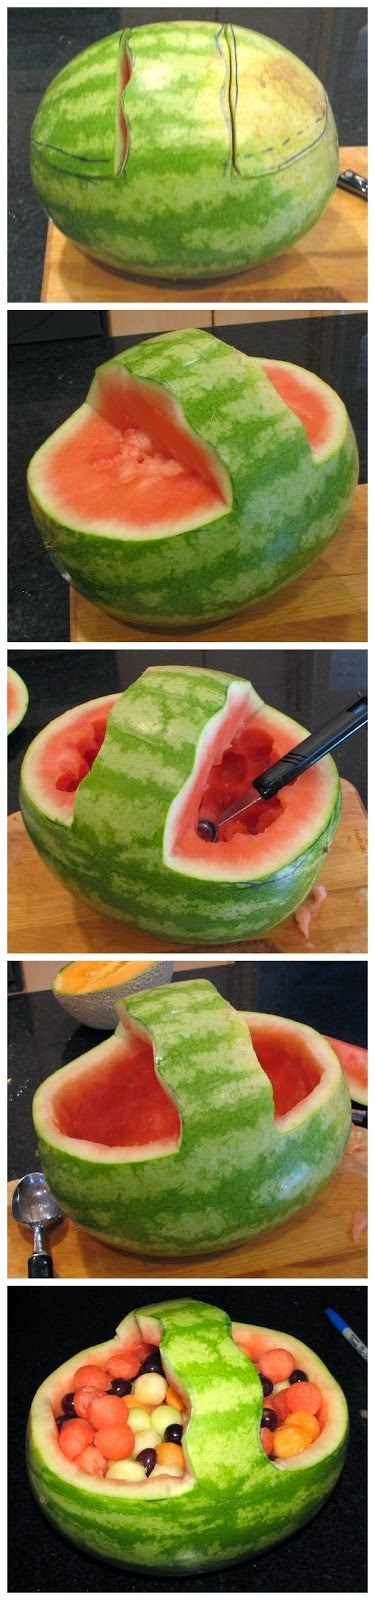 How To Make A Watermelon Basket - DIY & Crafts Tutorials